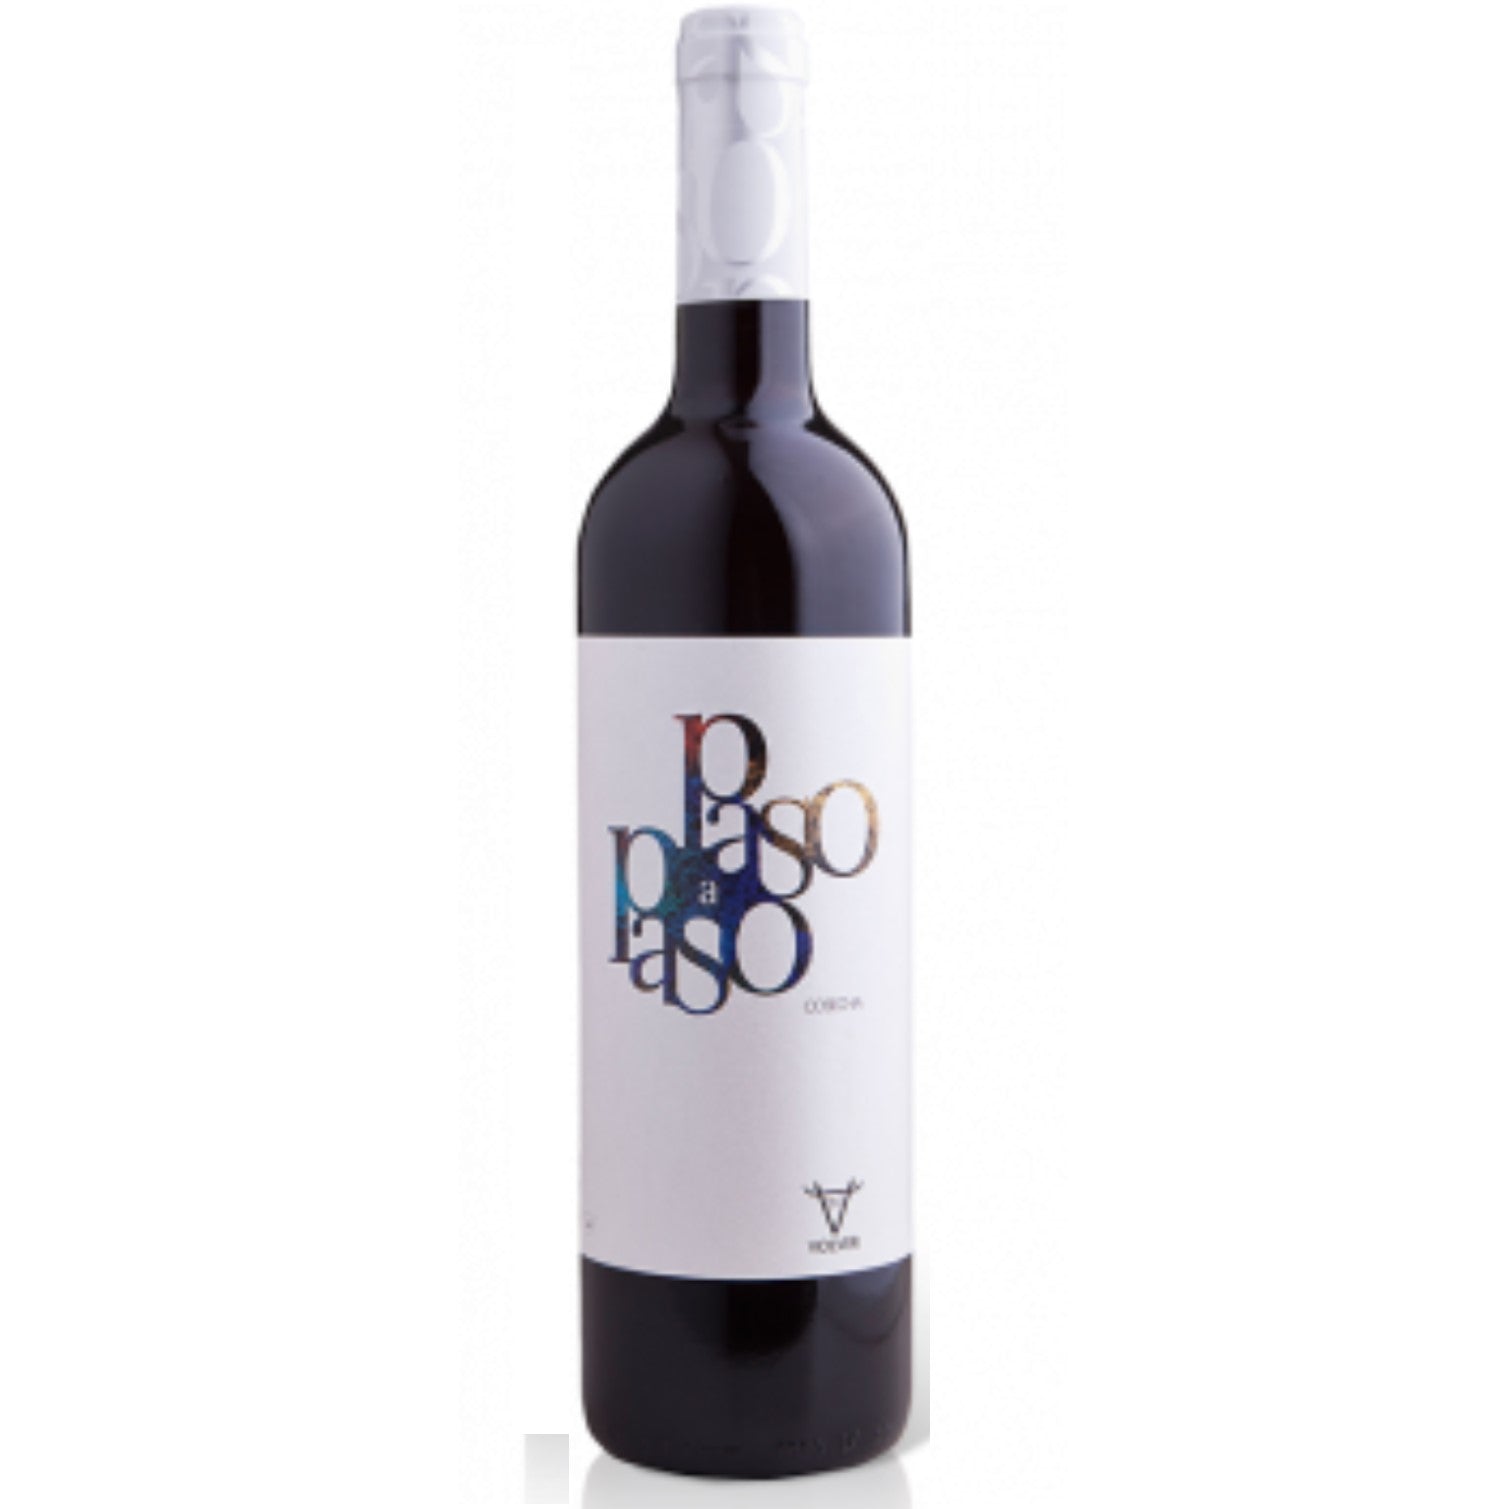 Bodegas Volver Paso a Paso Tinto Cosecha Rotwein Wein trocken Spanien (3 x 0.75l) - Versanel -